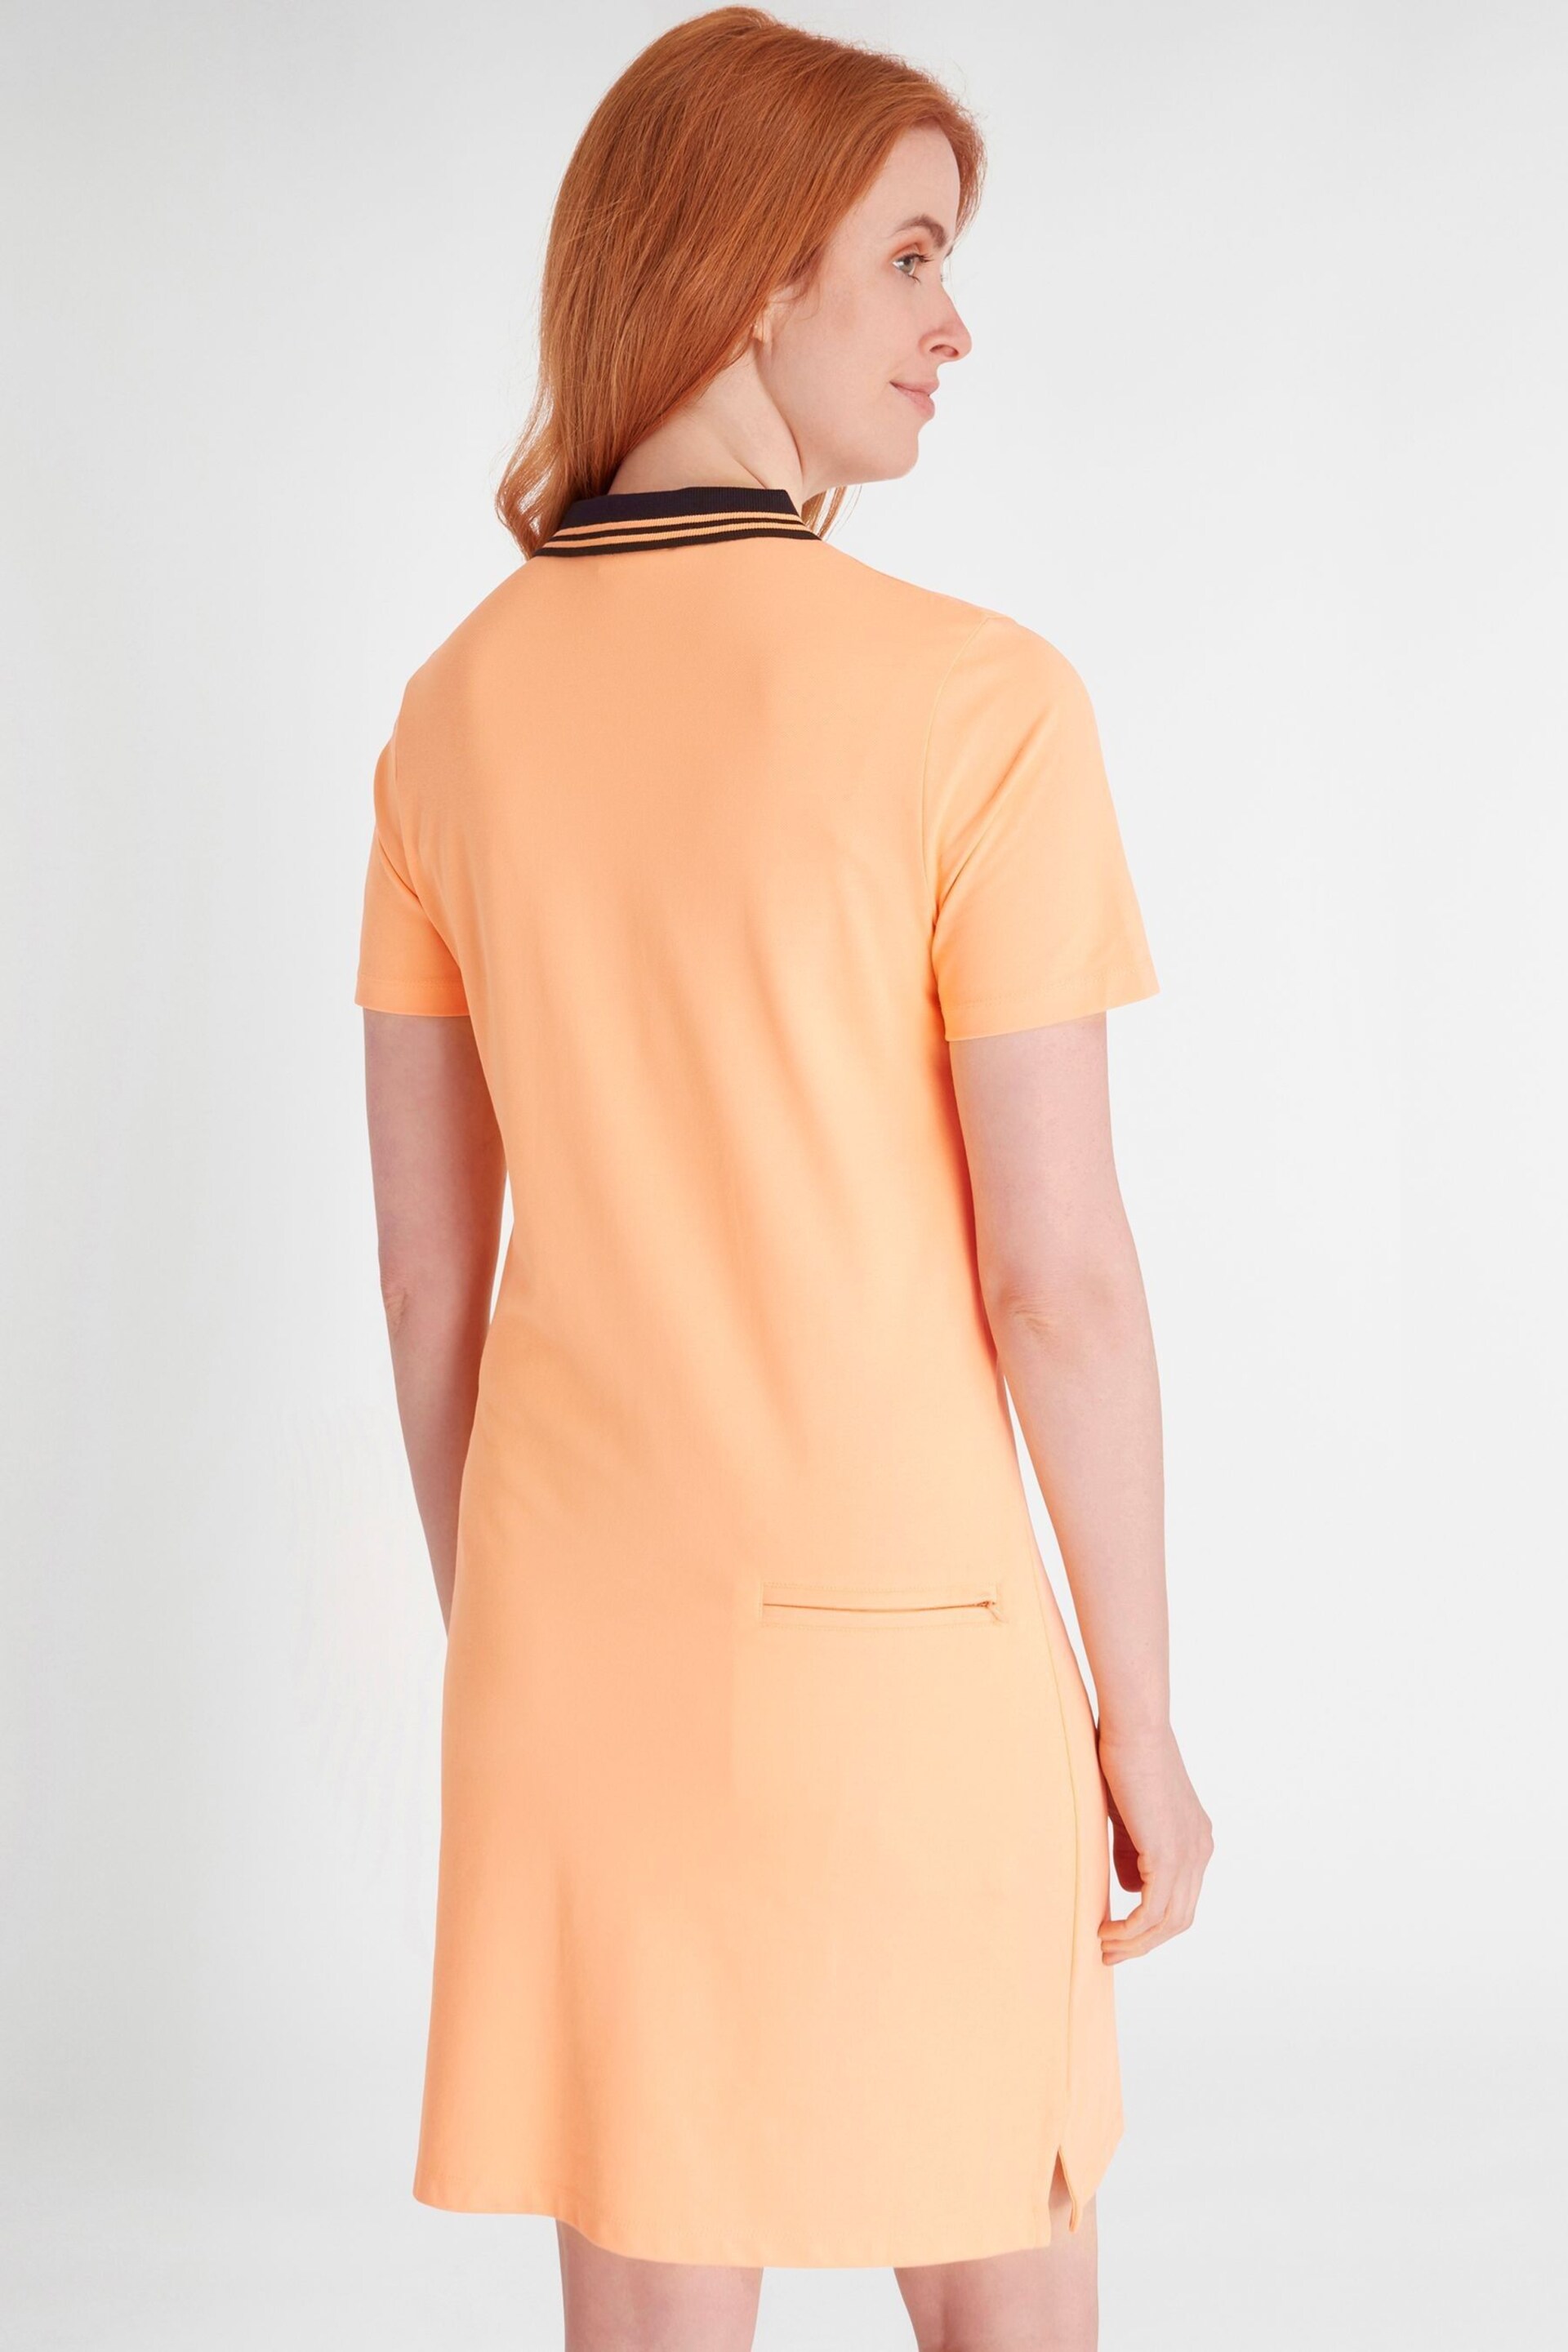 Calvin Klein Golf Orange Primrose Dress - Image 9 of 16